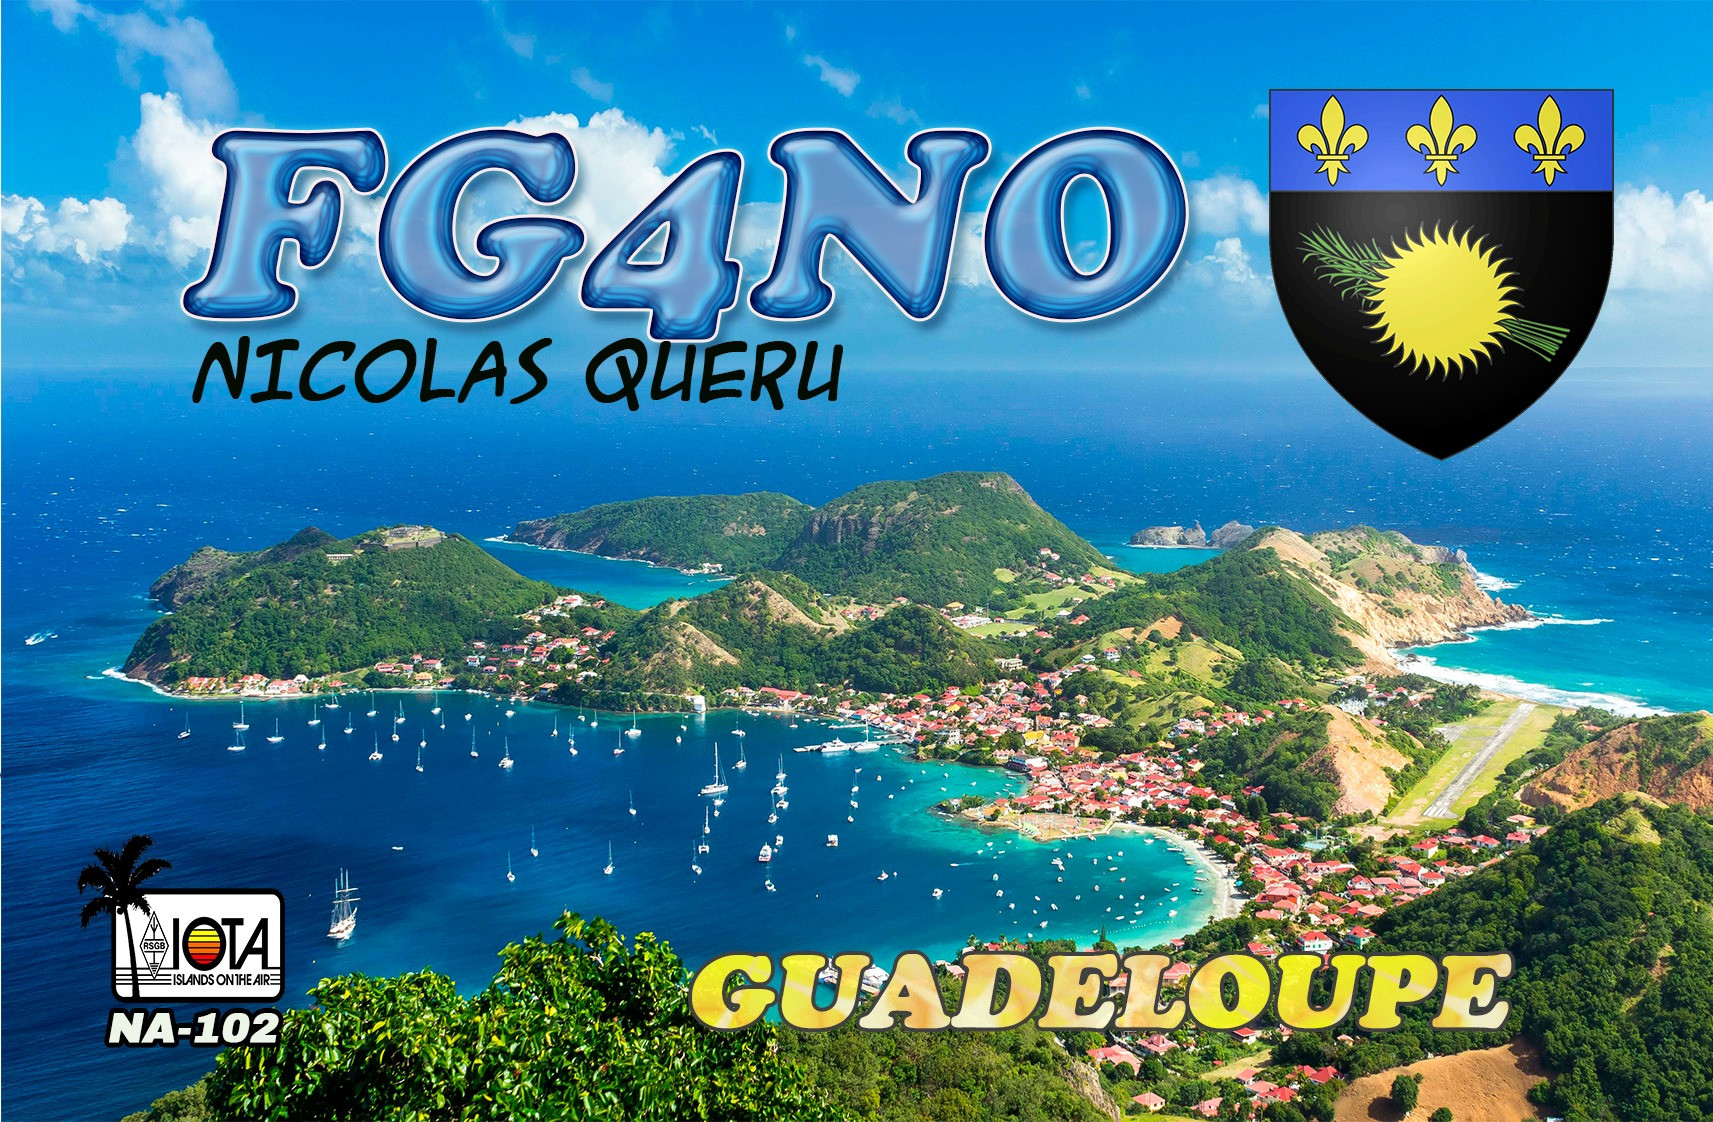 FG4NO Guadeloupe QSL Card